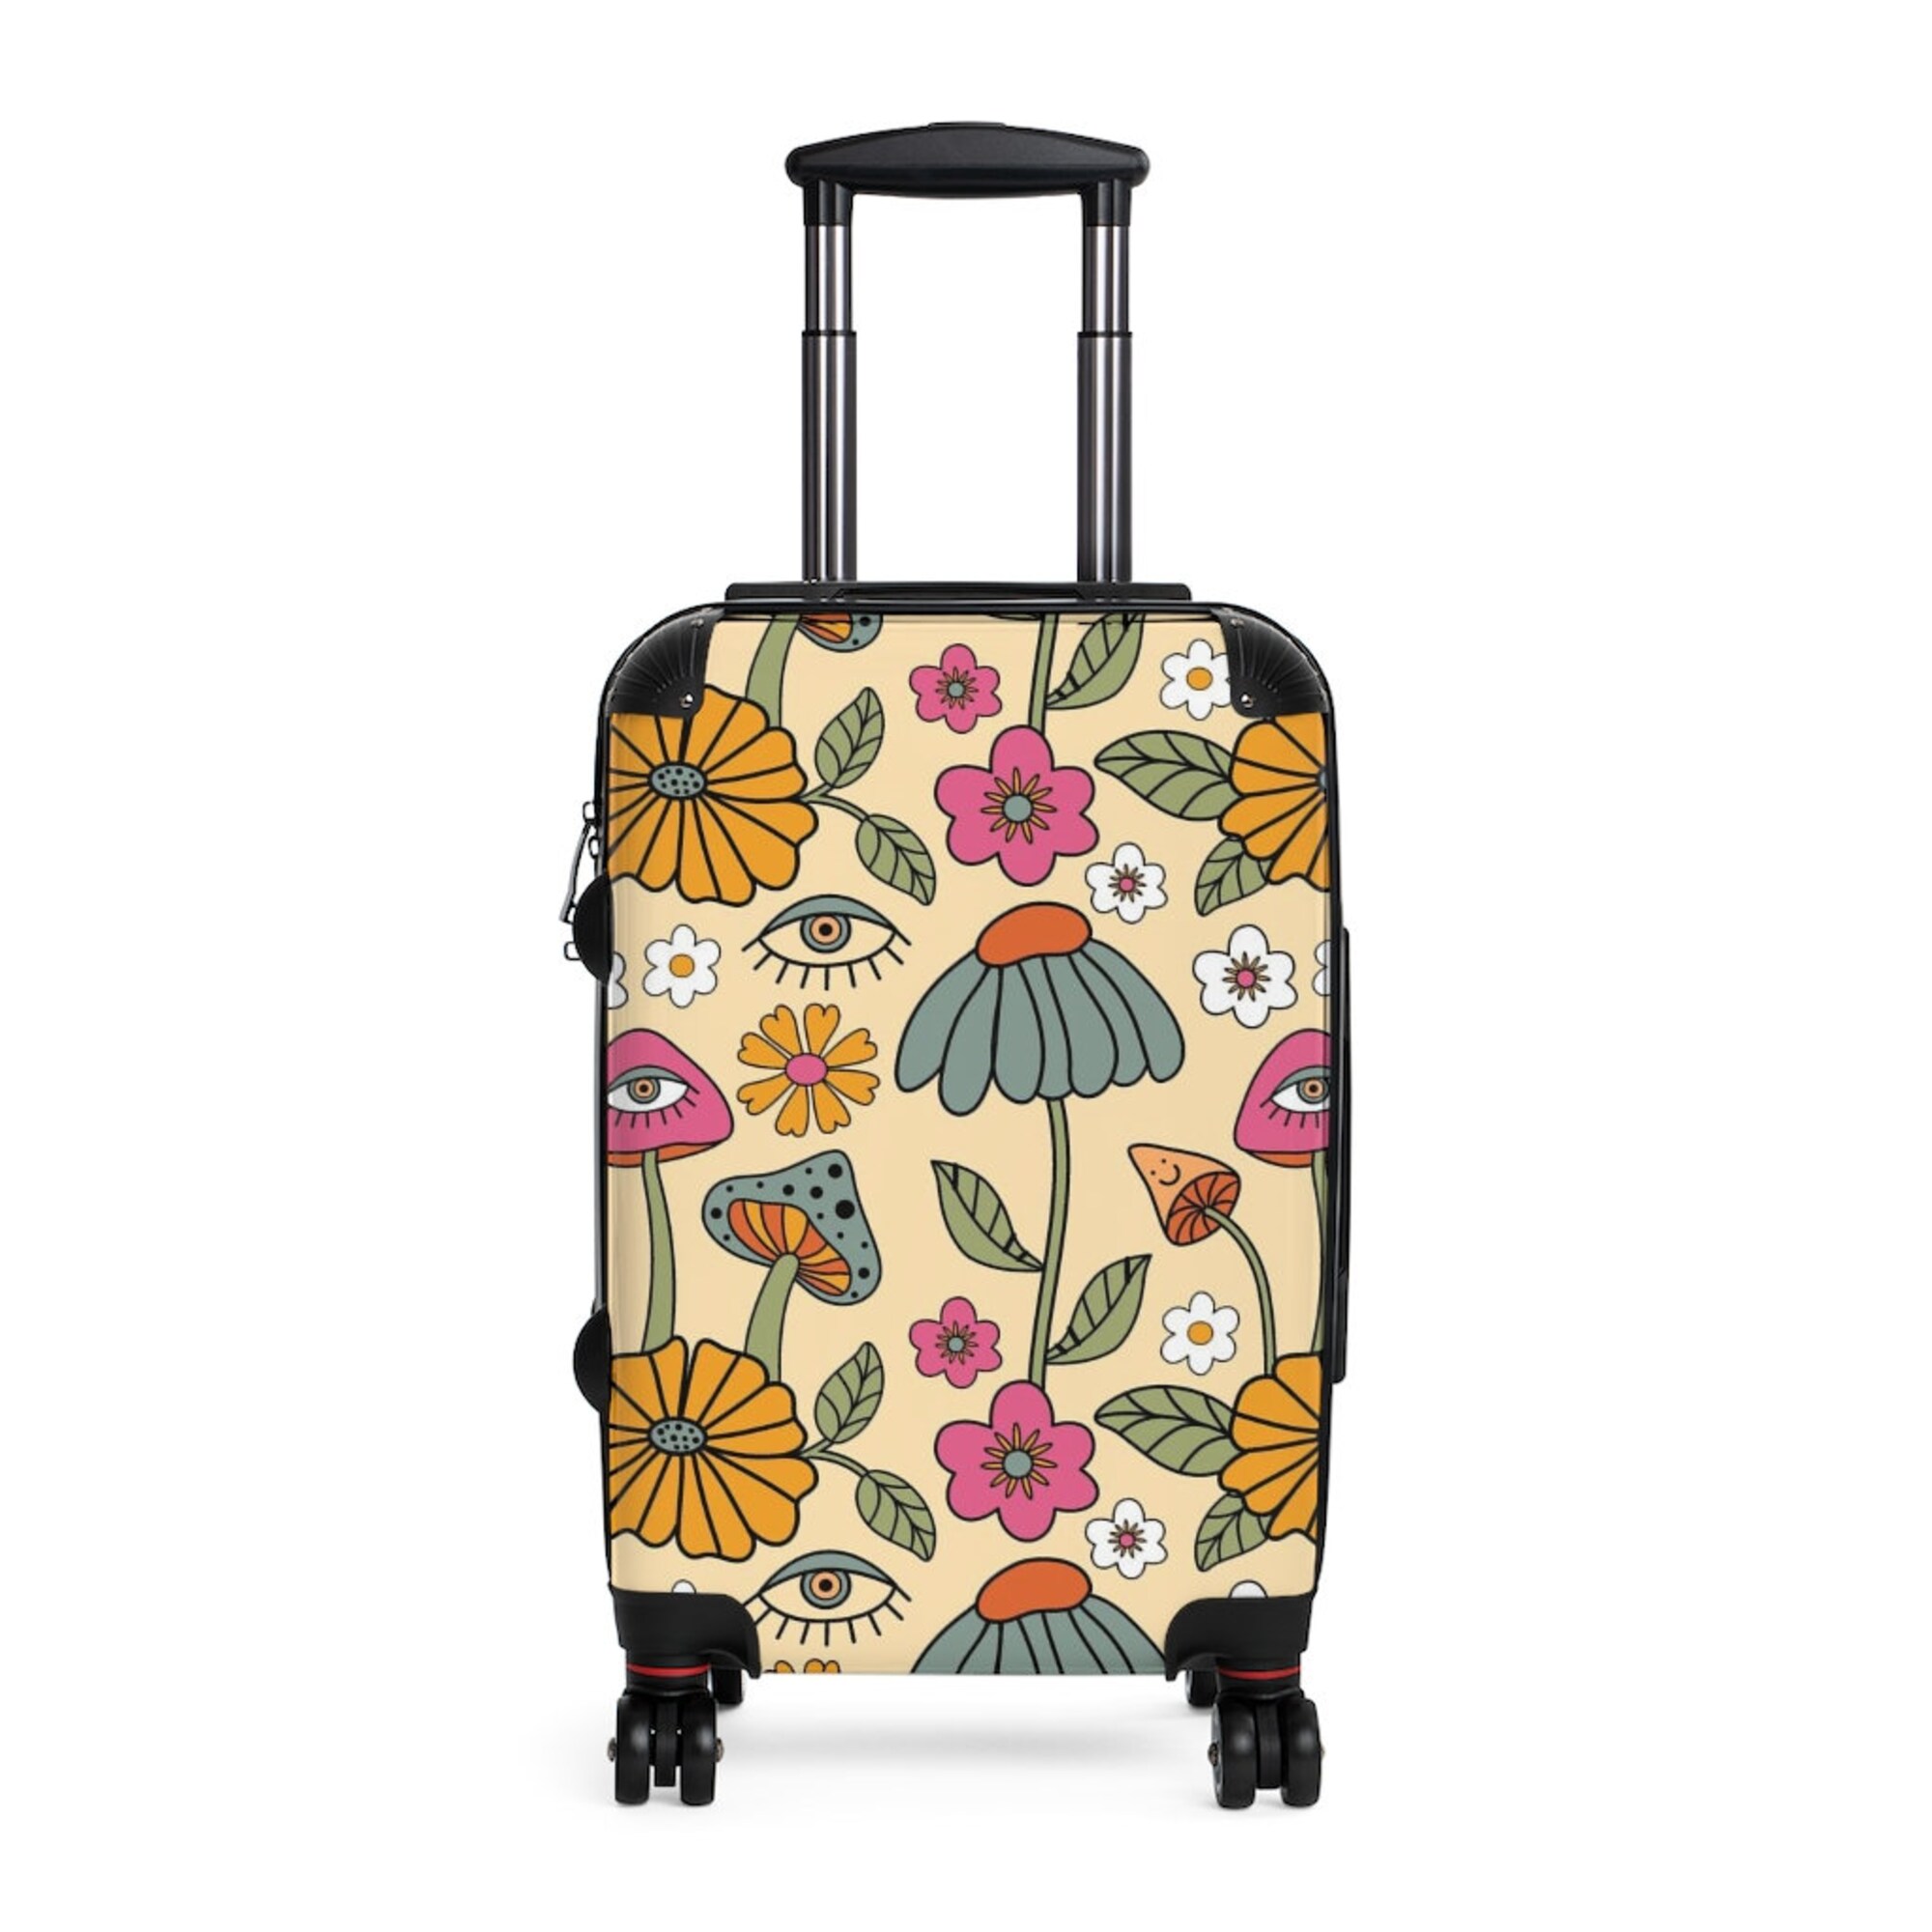 Shrooms & Blooms Hippie Suitcase